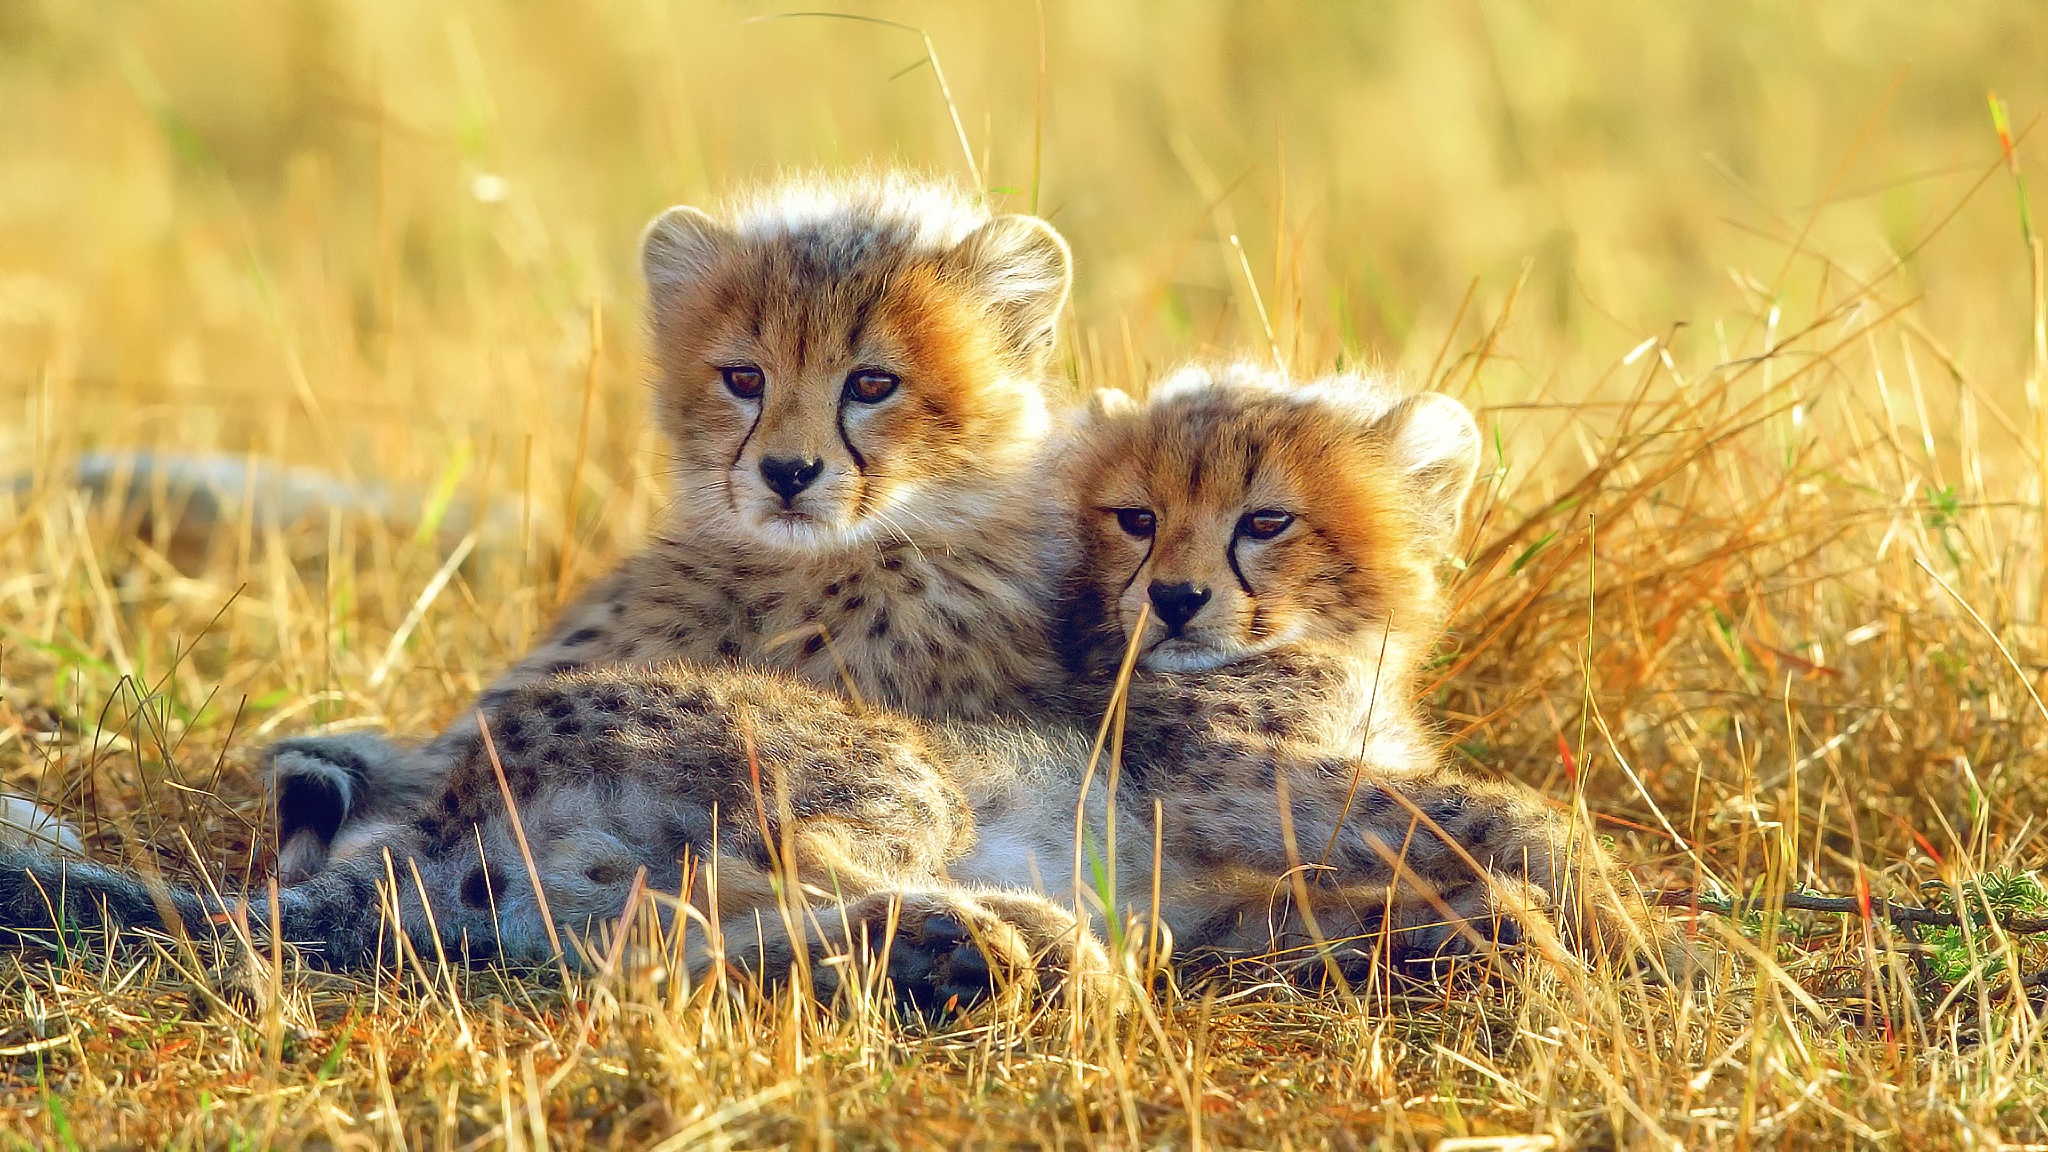 cub, cheetah, animal, baby animal, grass, cats Aesthetic wallpaper